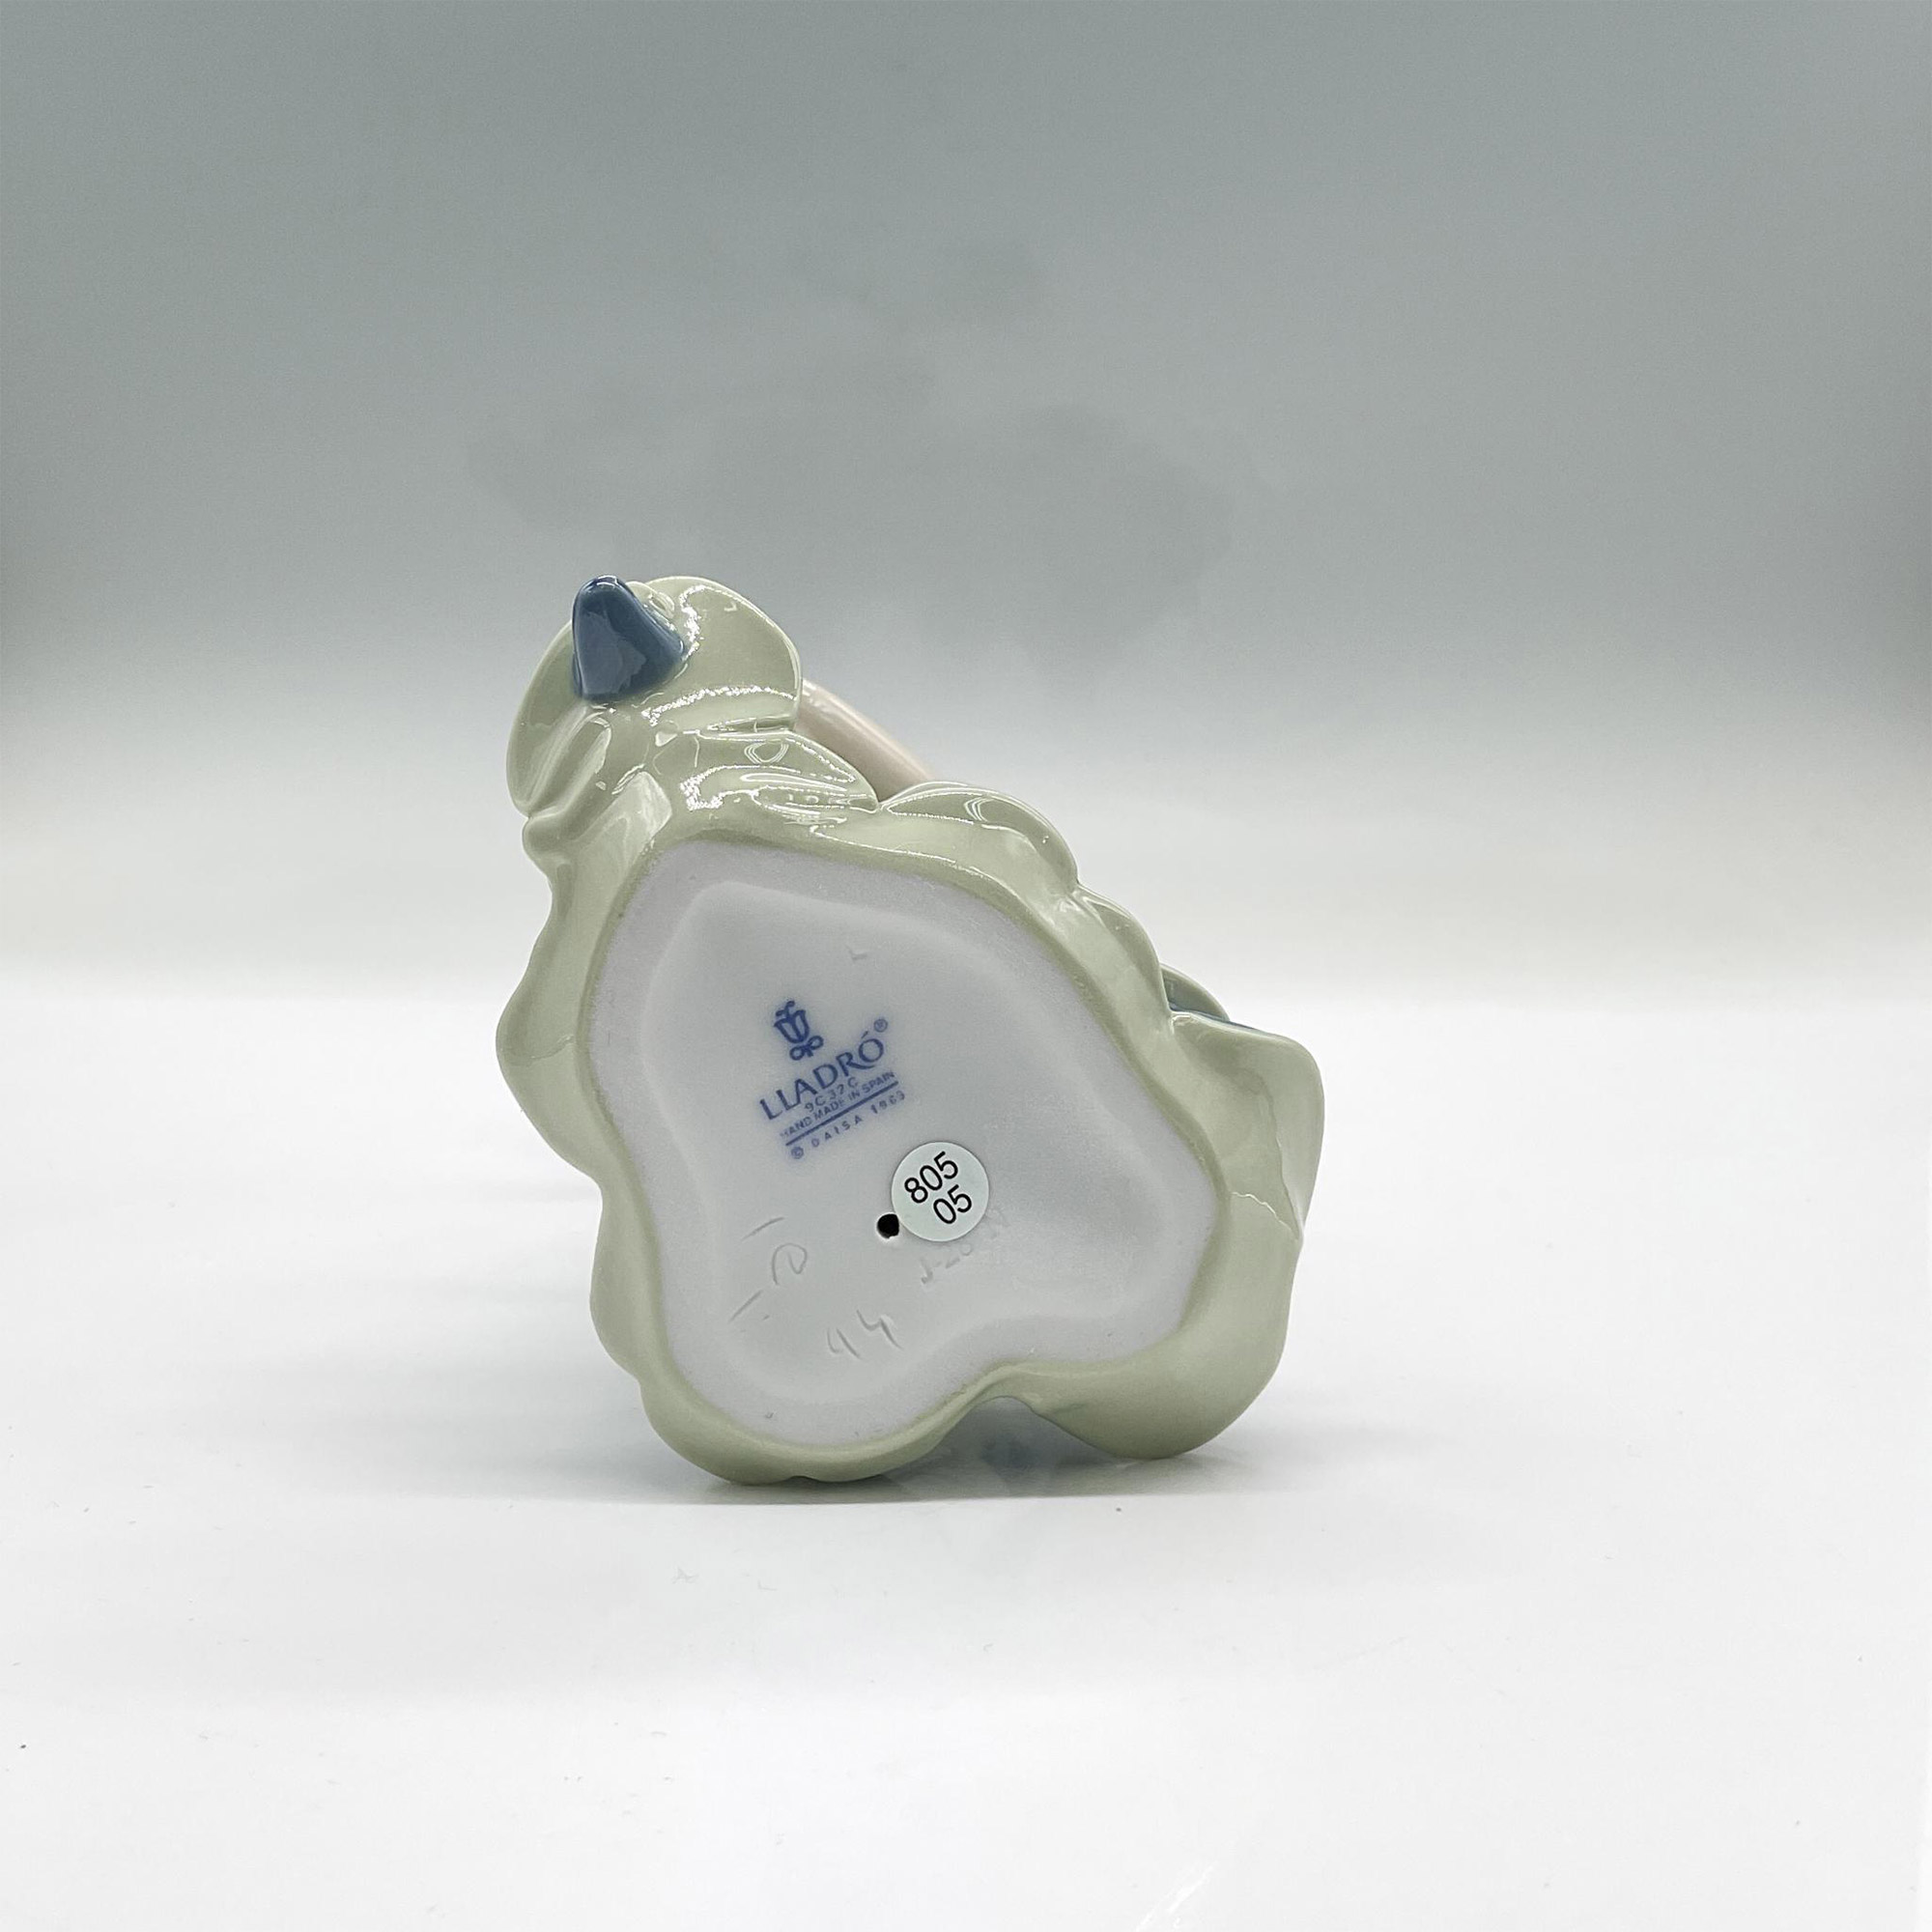 Lolita 1005192 - Lladro Porcelain Figurine - Image 3 of 4